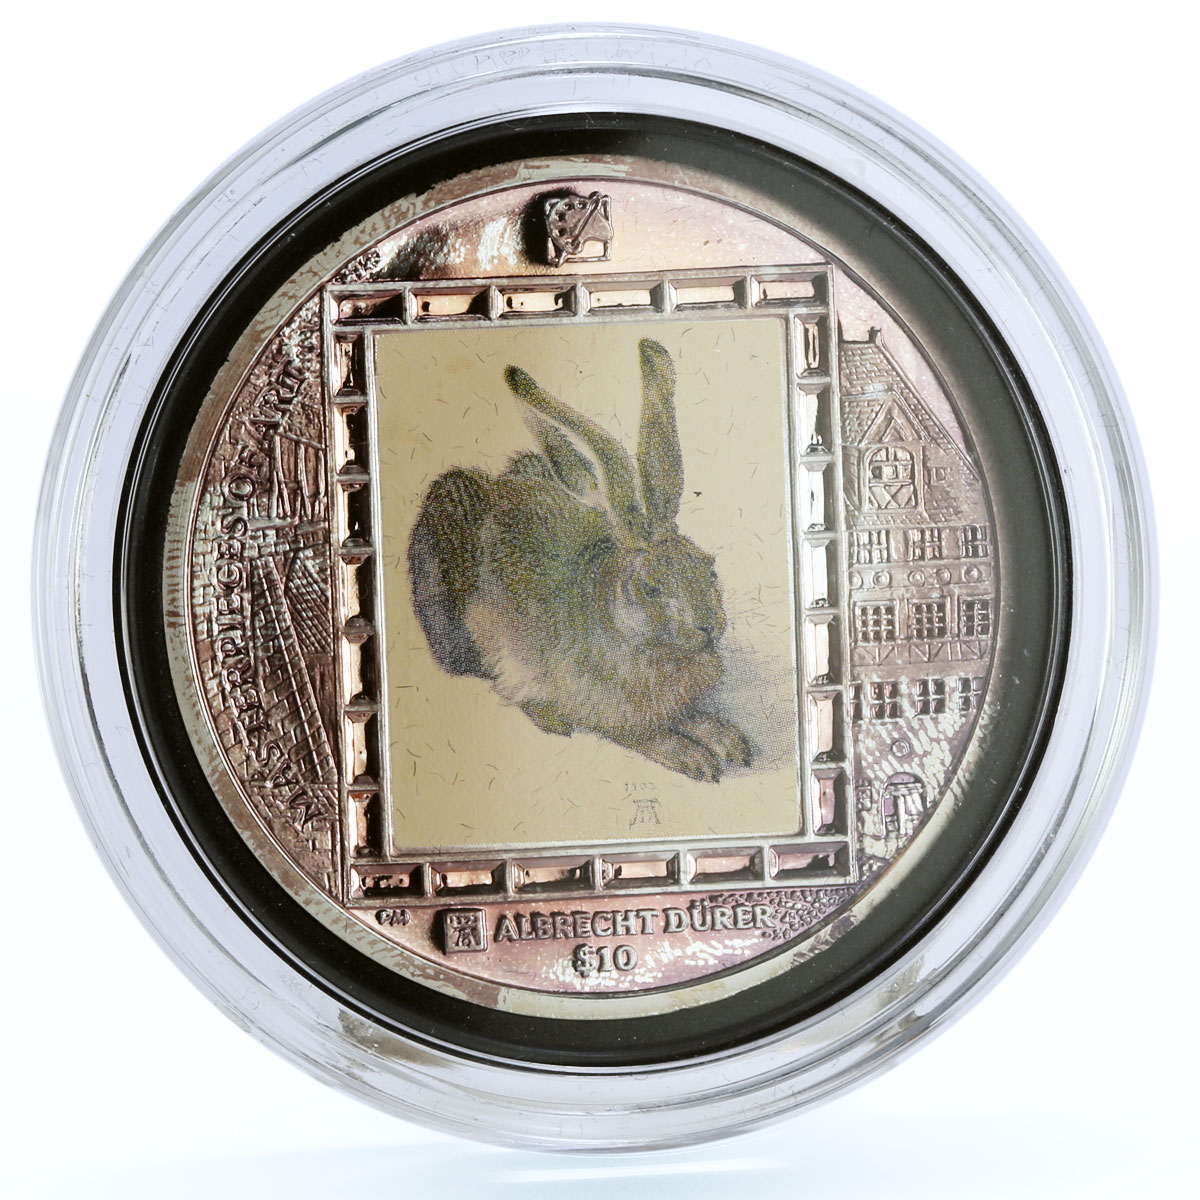 British Virgin Islands 10 dollars Albrecht Durer Hare Art colored Ag coin 2011